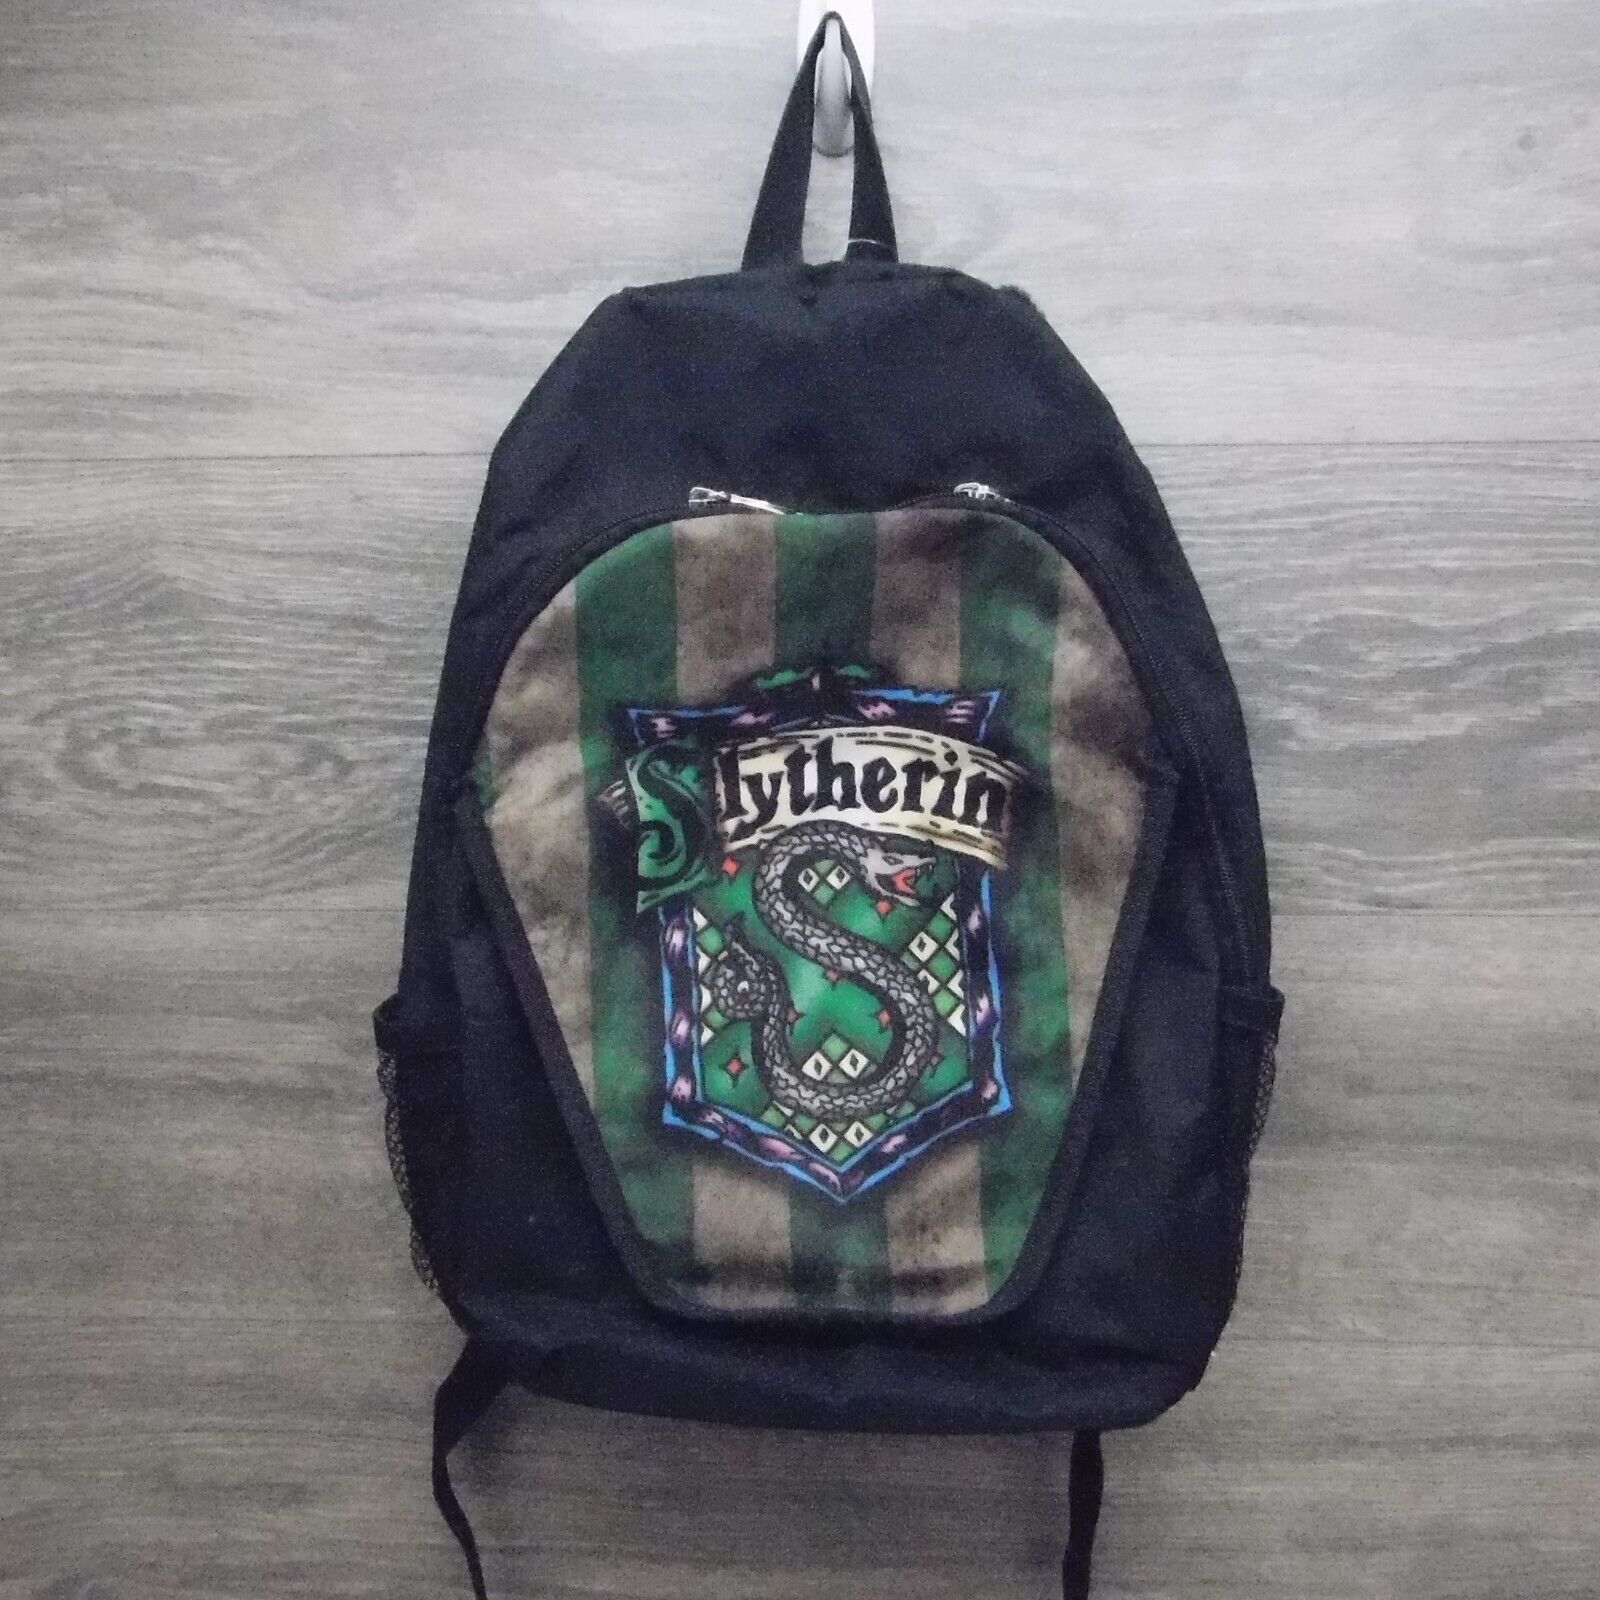 Harry Potter Slytherin Green Black School Backpack Snake - $40.57